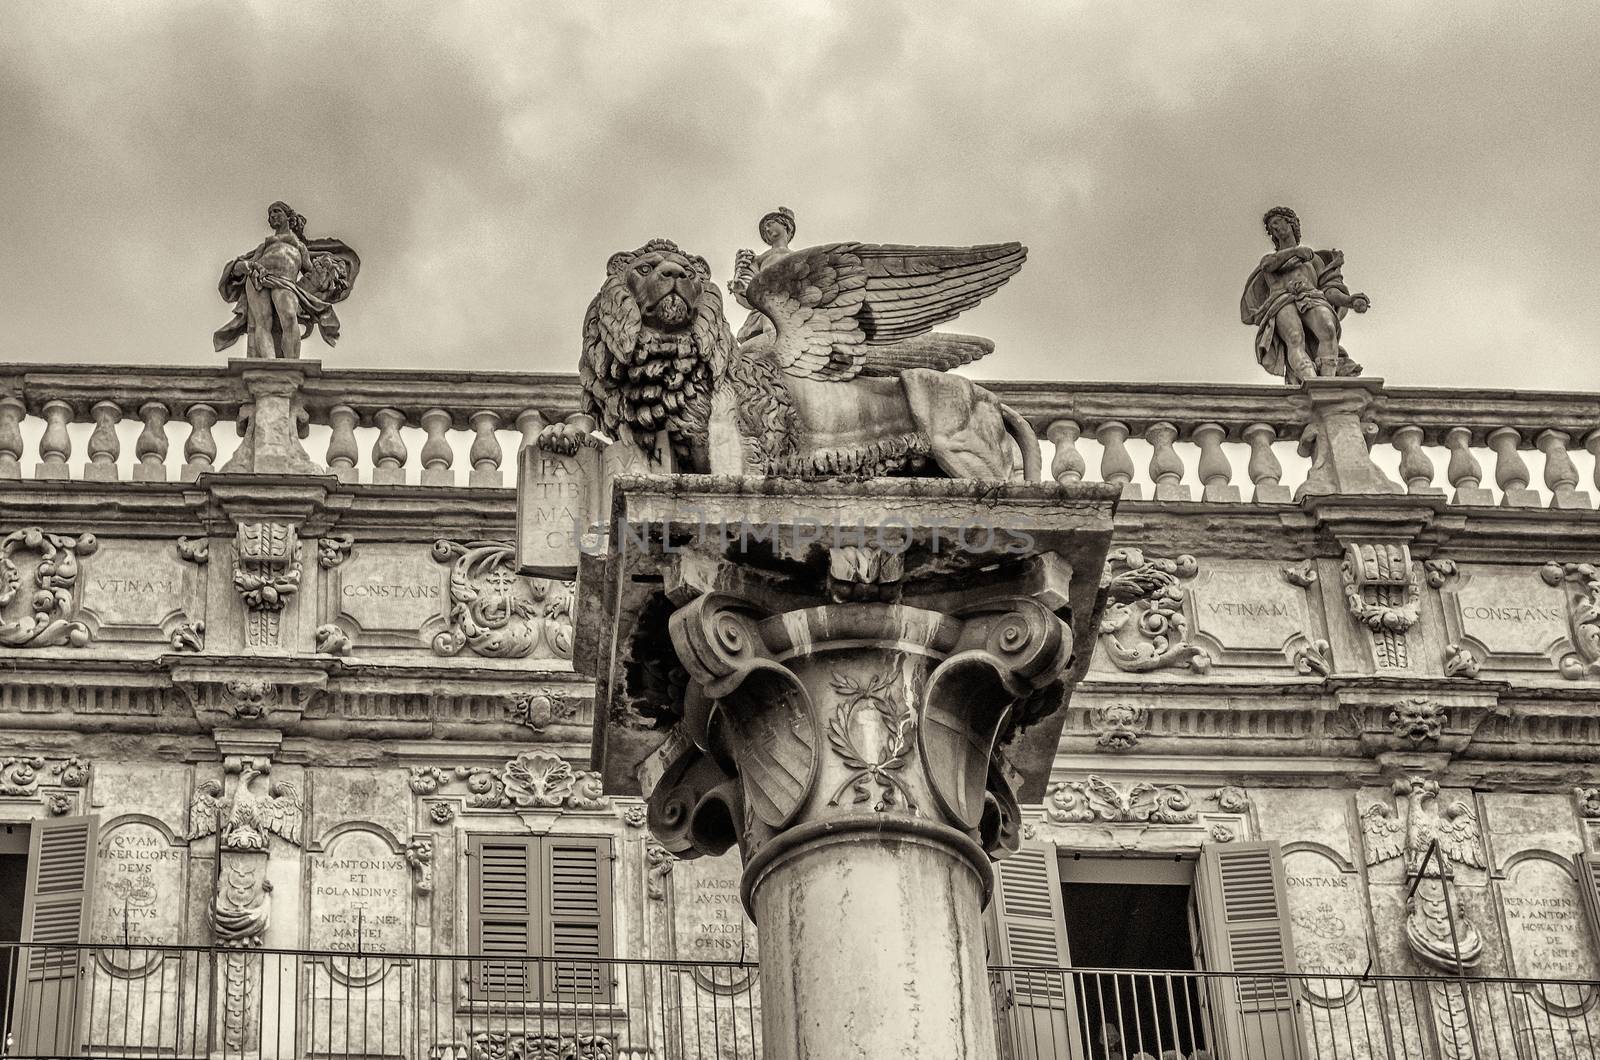 The Lion of St. Mark, Verona by marcorubino